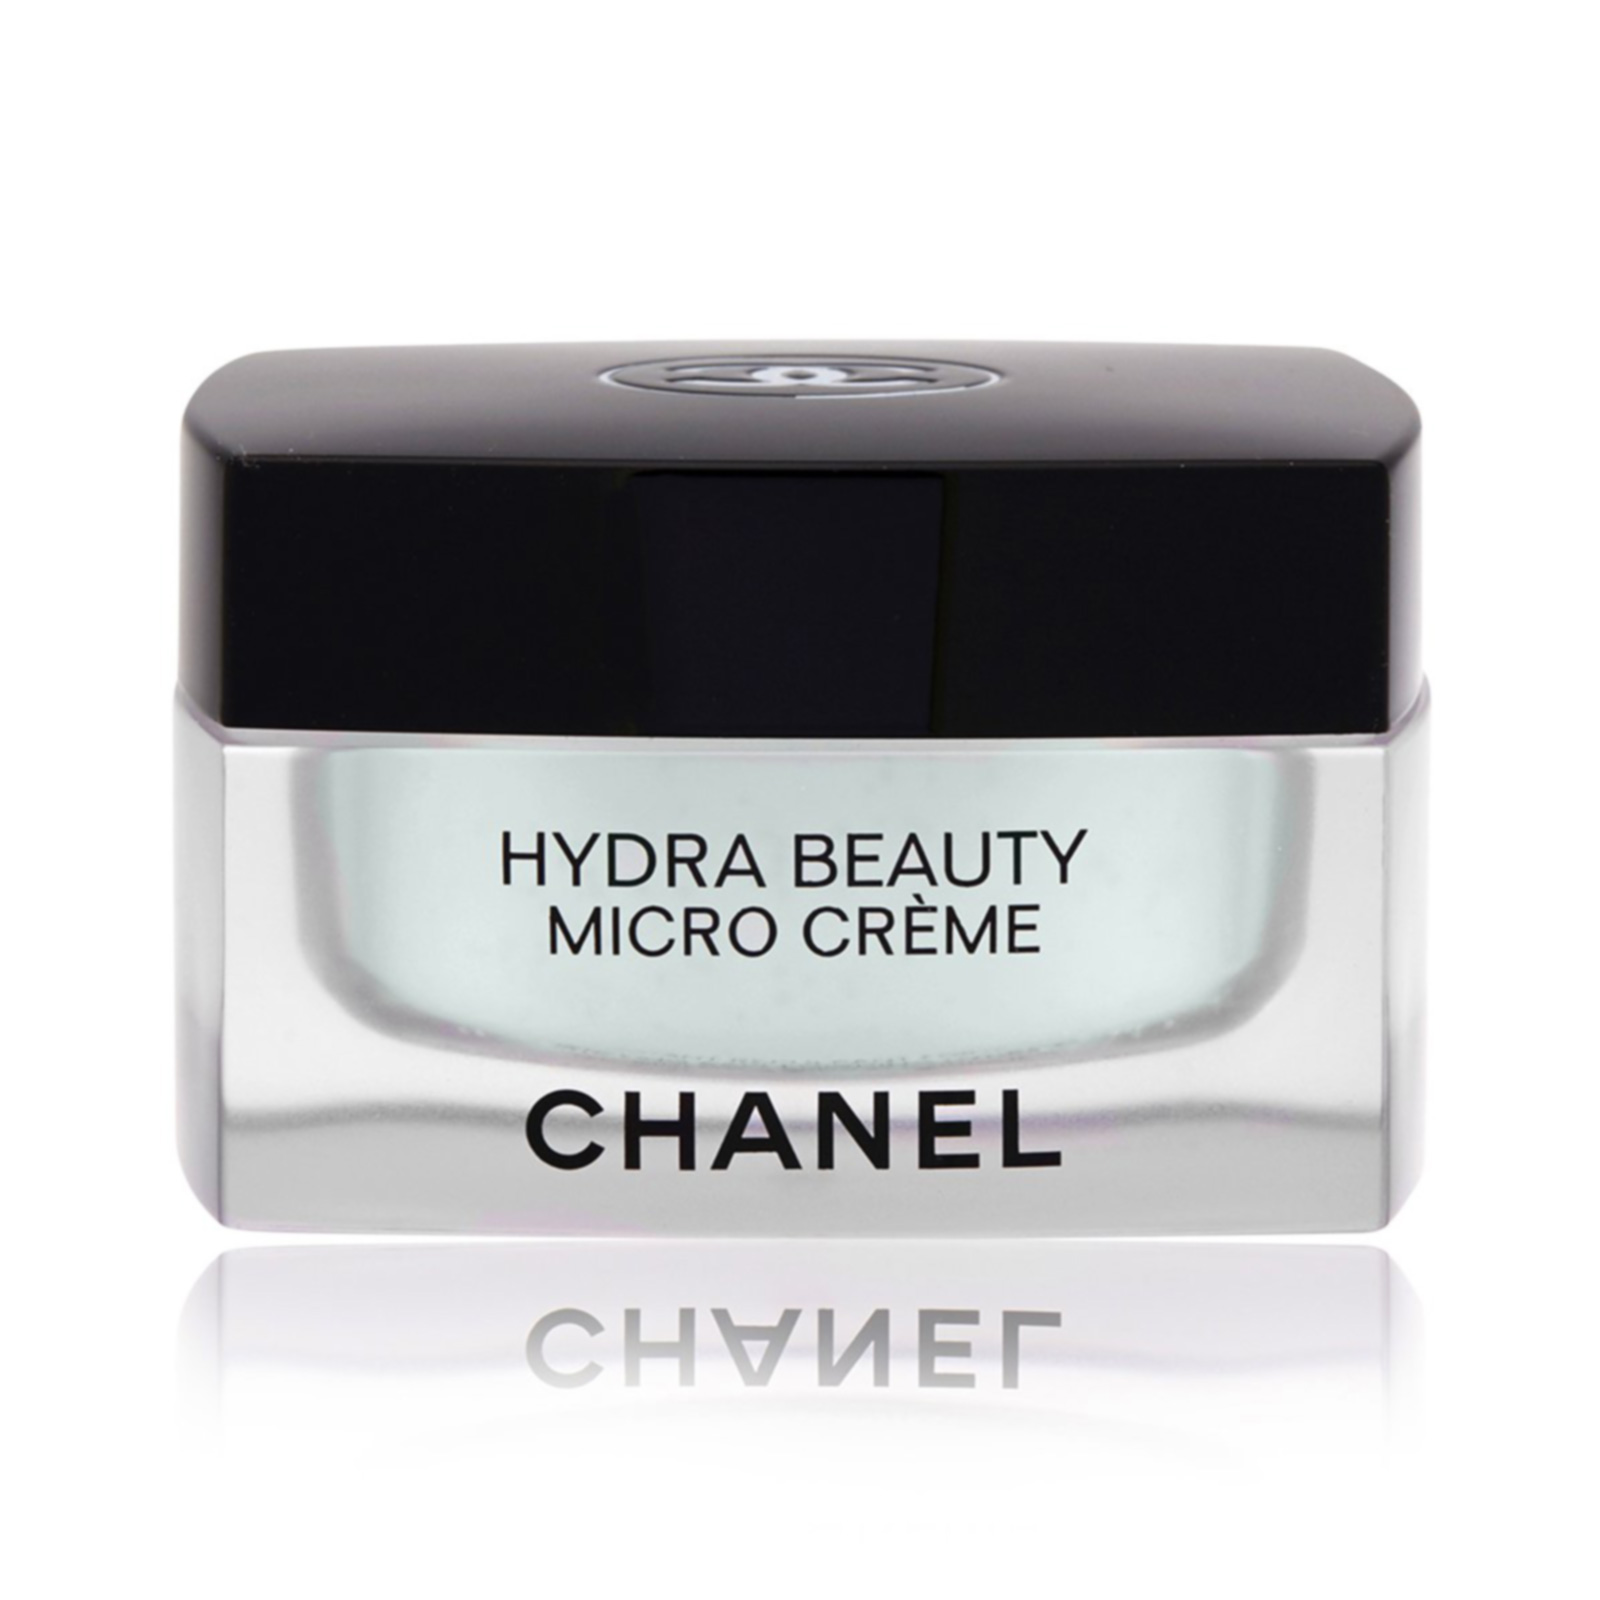 Tổng hợp 58 về creme hydra beauty chanel hay nhất  cdgdbentreeduvn